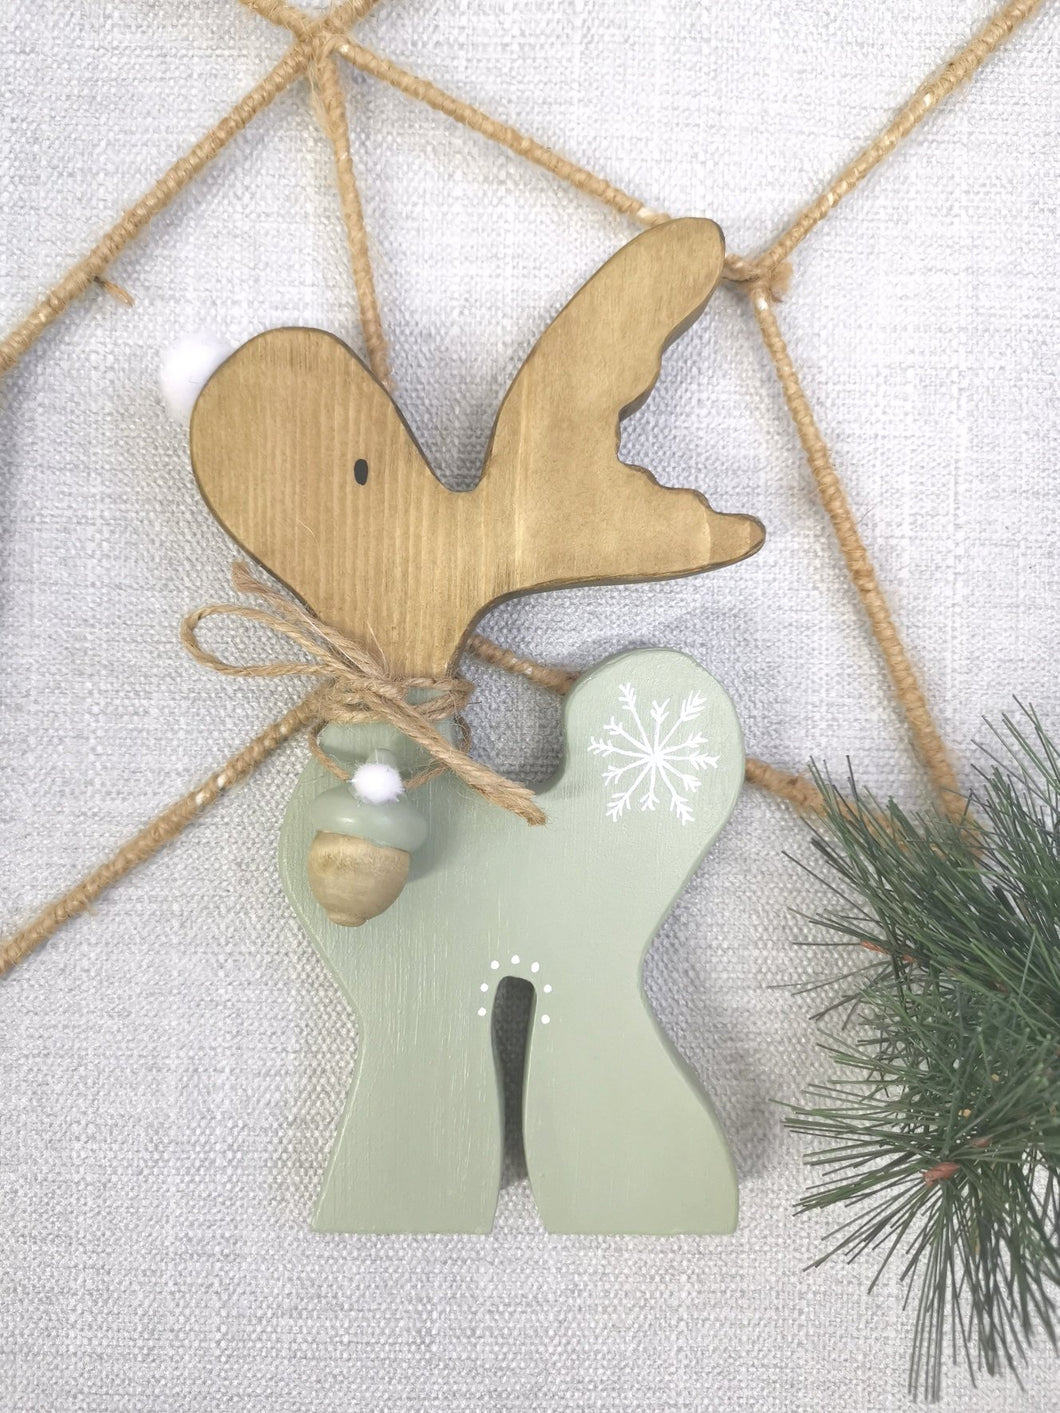 Wooden Reindeer Christmas Decoration, wooden Christmas gift, Christmas decor,Hygge home,